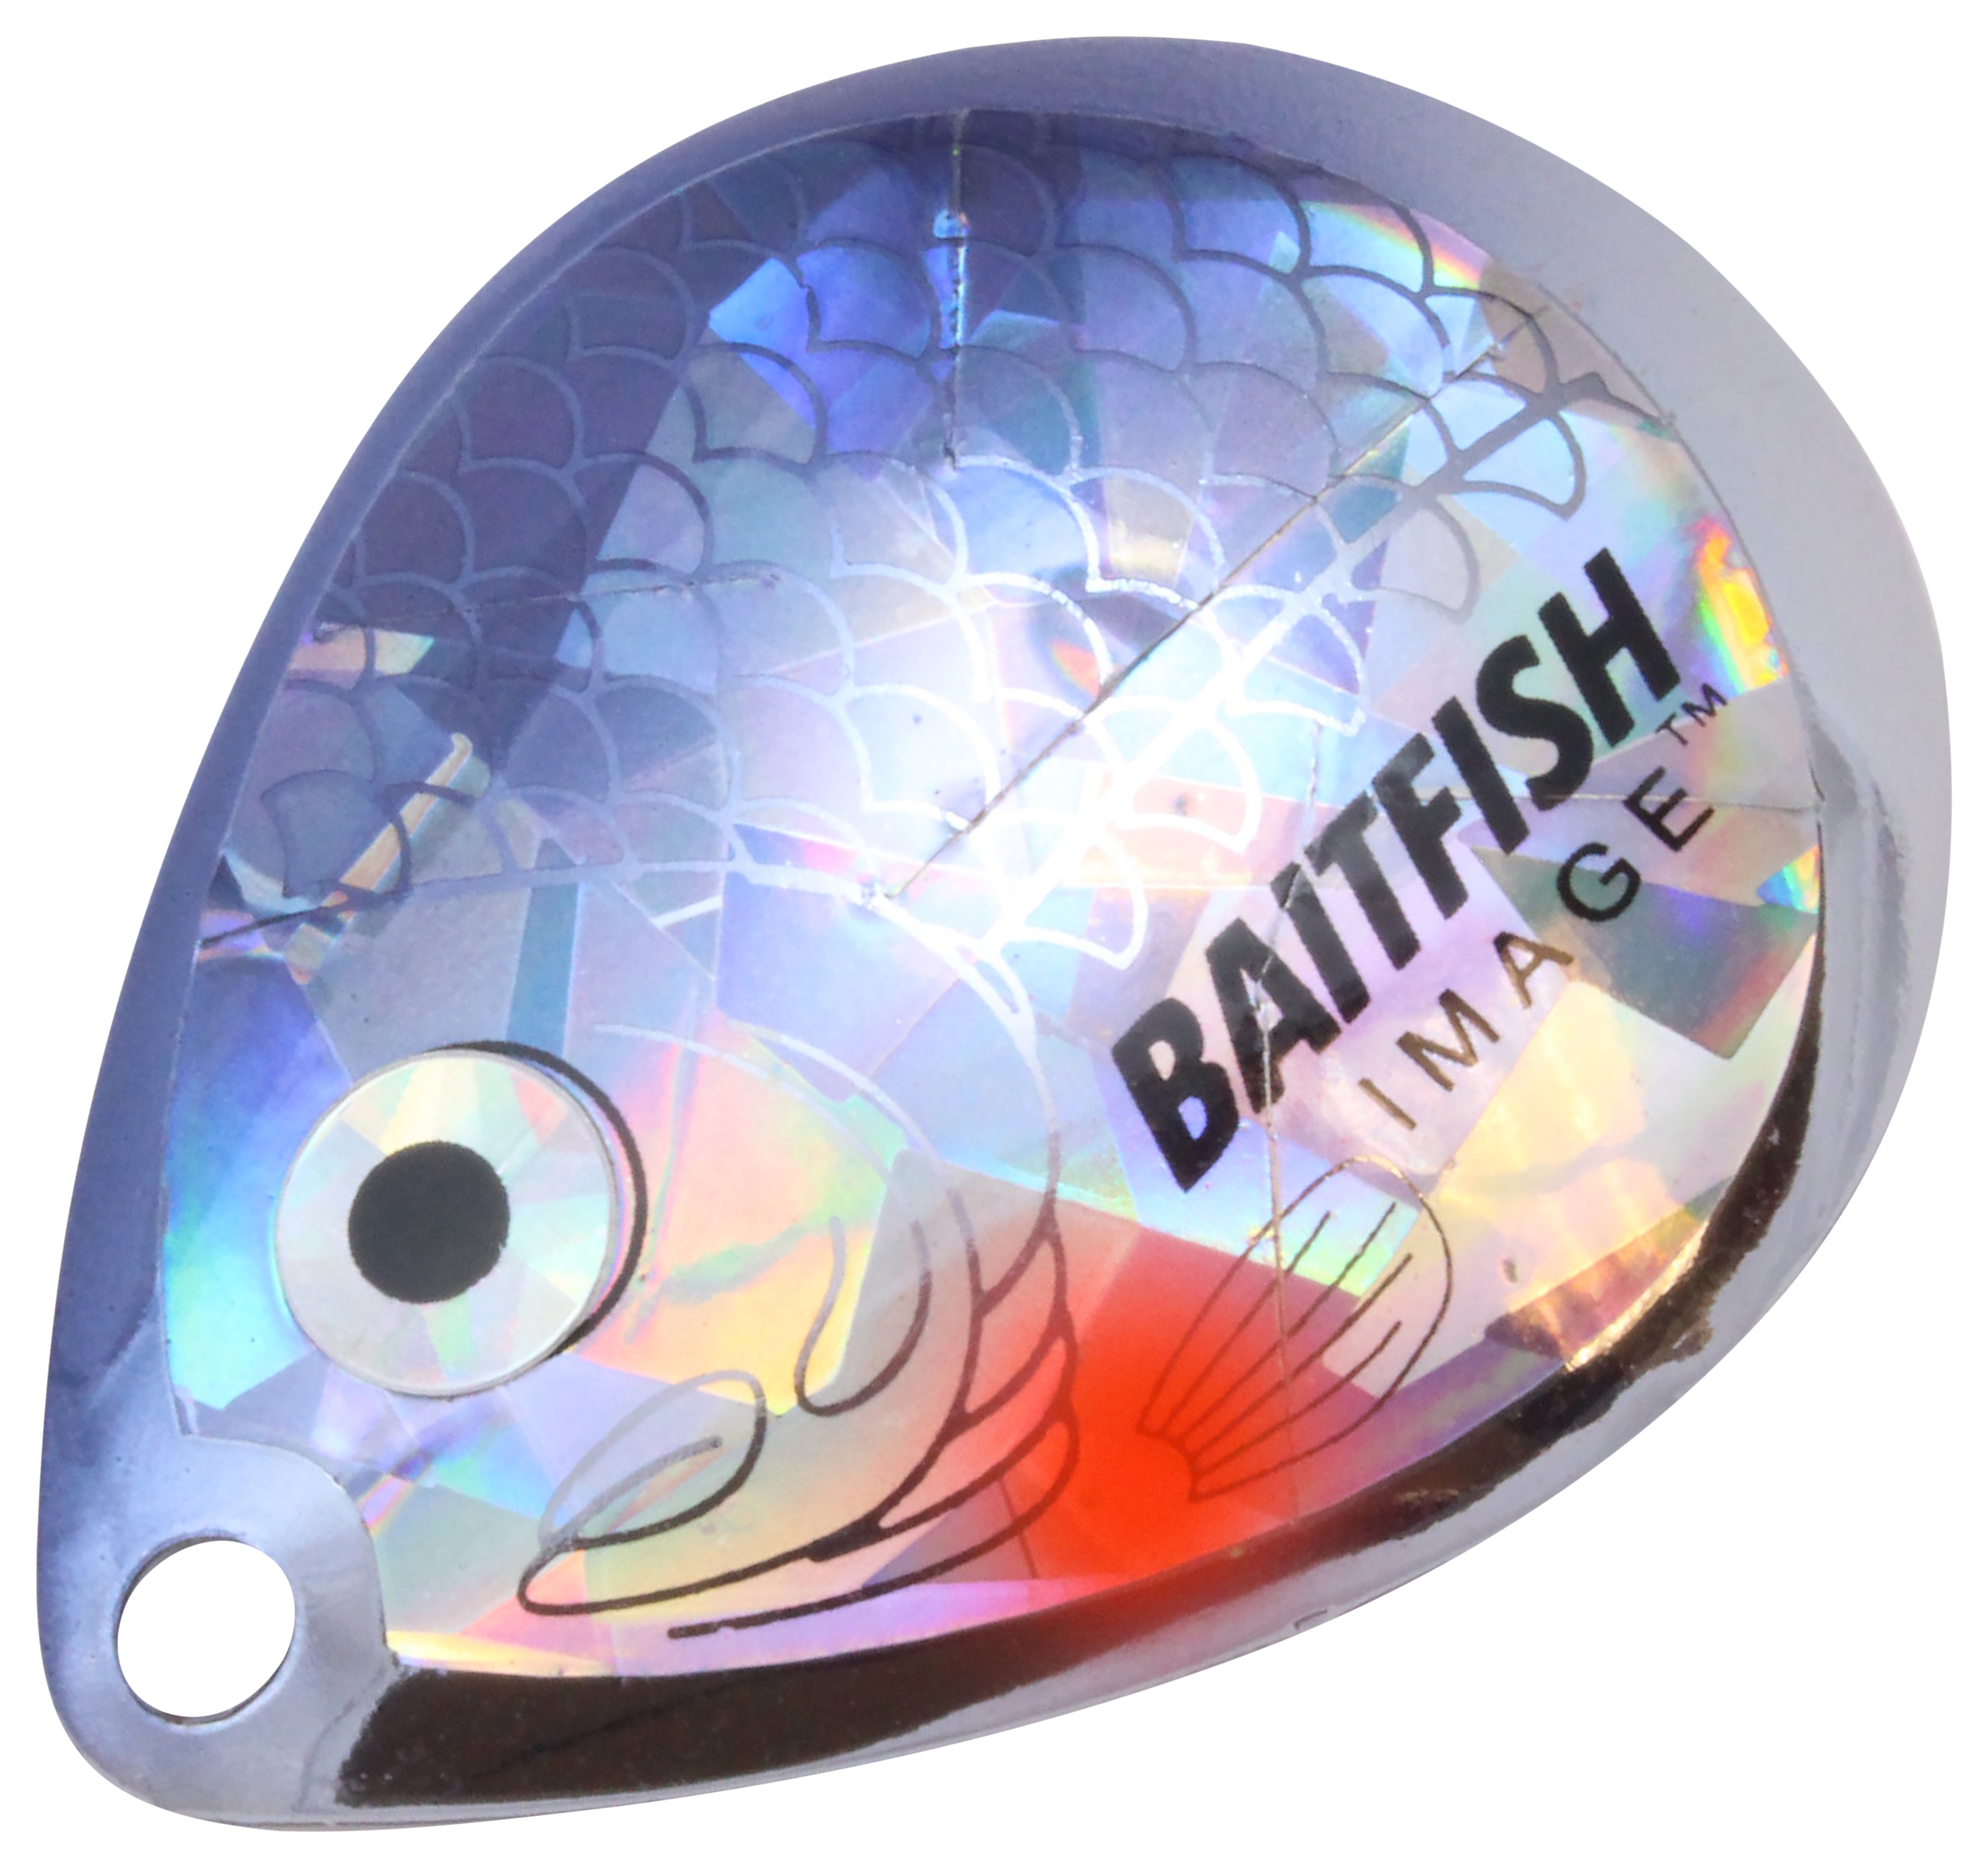 Baitfish-Image Colorado Blades - Northland Fishing Tackle